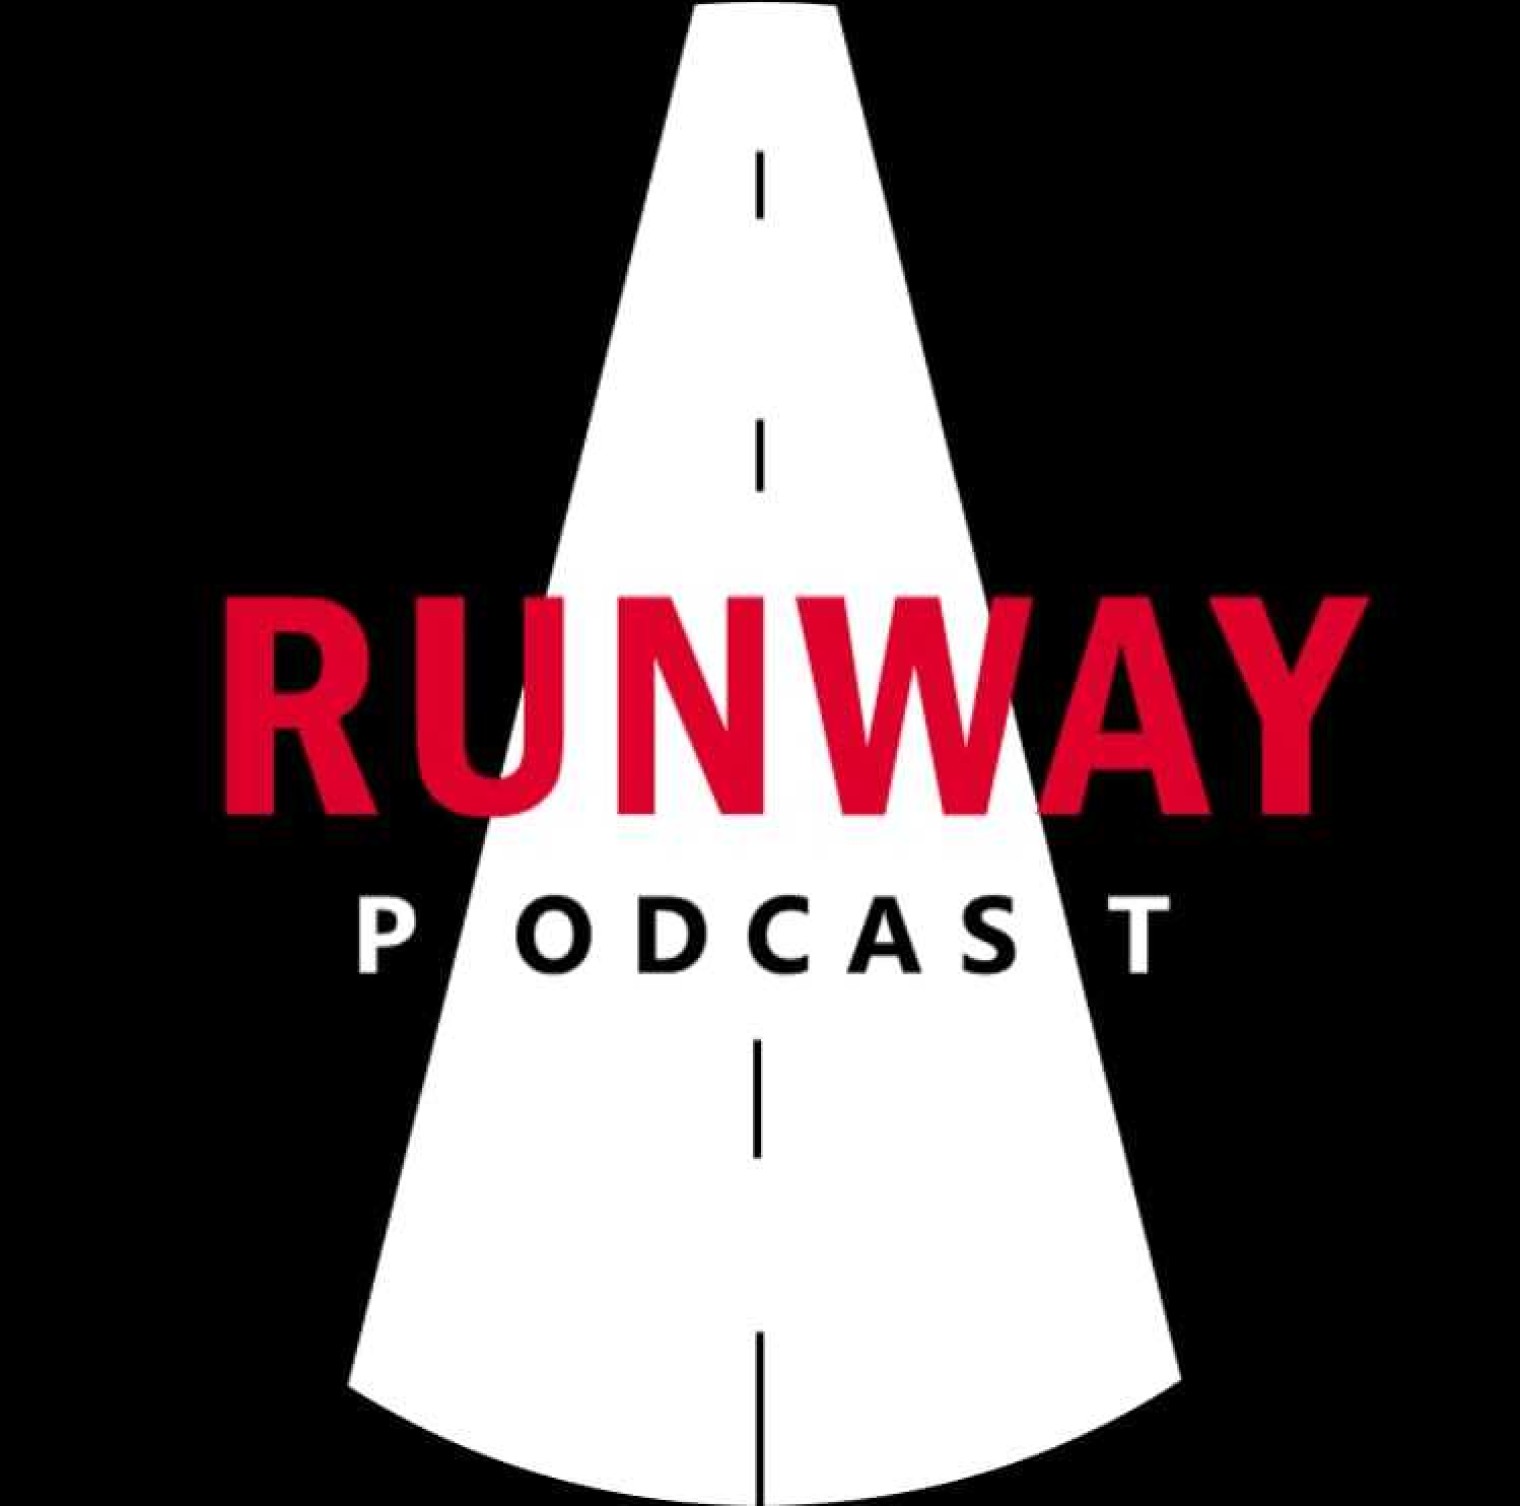 Runway Podcast -  Runway Podcast 